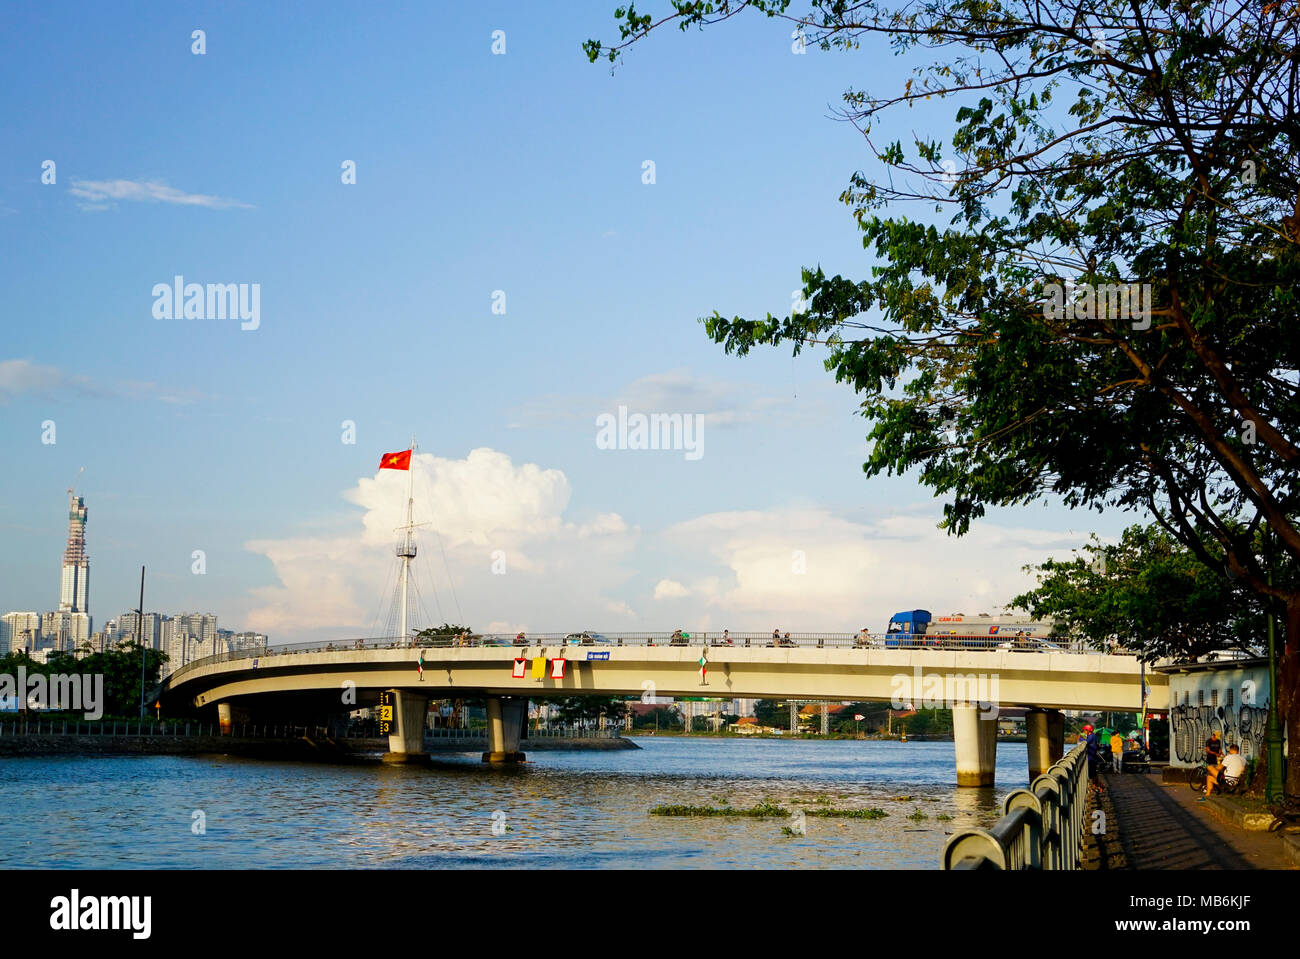 Il ponte Khanh Hoi che collega Nguyen Tat Thanh Street e Ton Duc Thang Street sul ben Nghe e Saigon River, ho Chi Minh City, Vietnam. Foto Stock